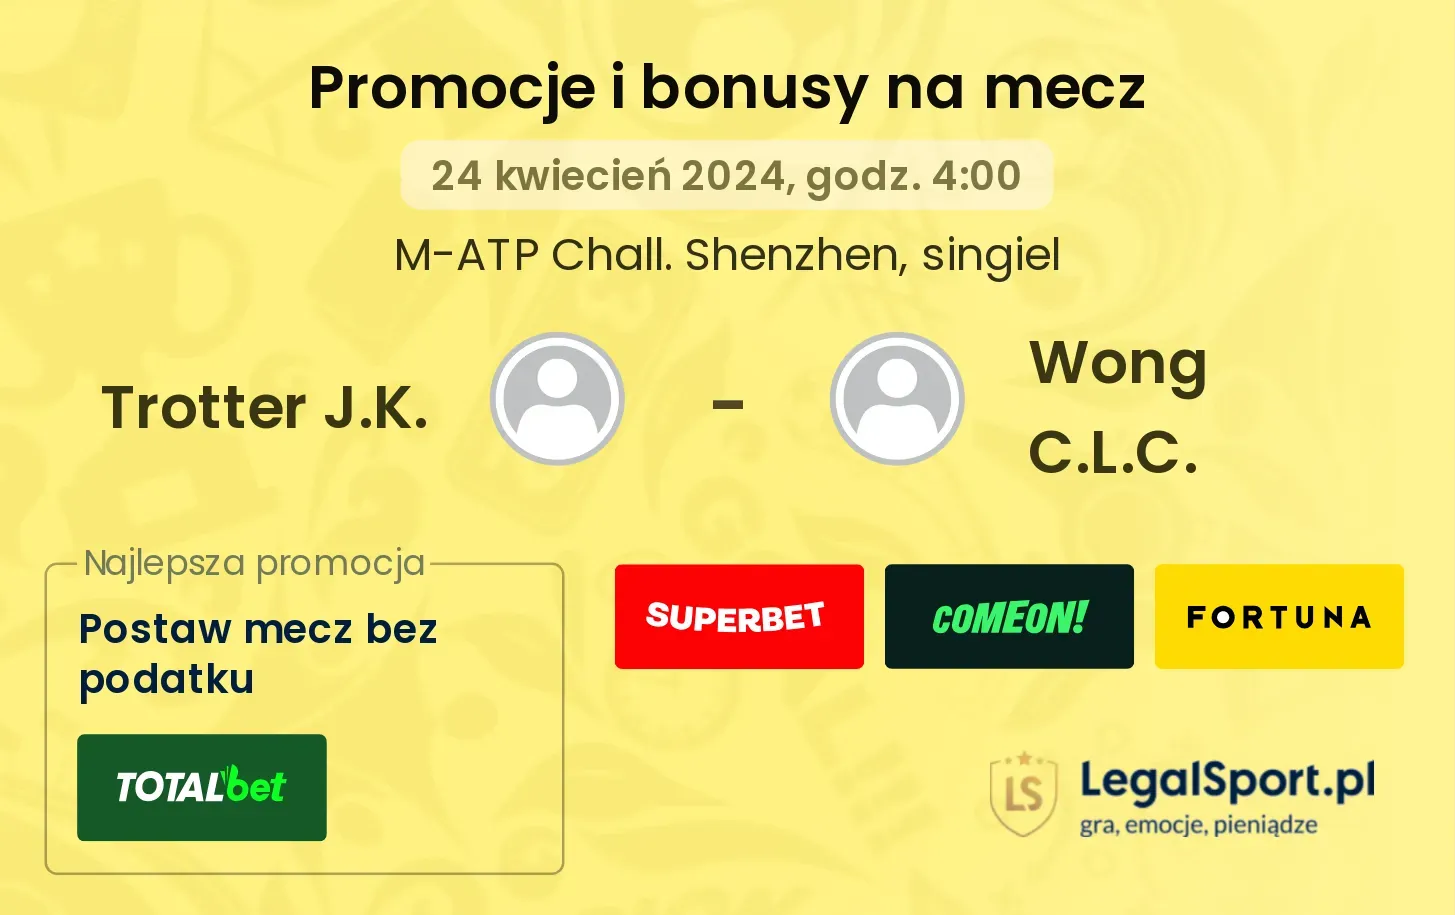 Trotter J.K. - Wong C.L.C. promocje bonusy na mecz